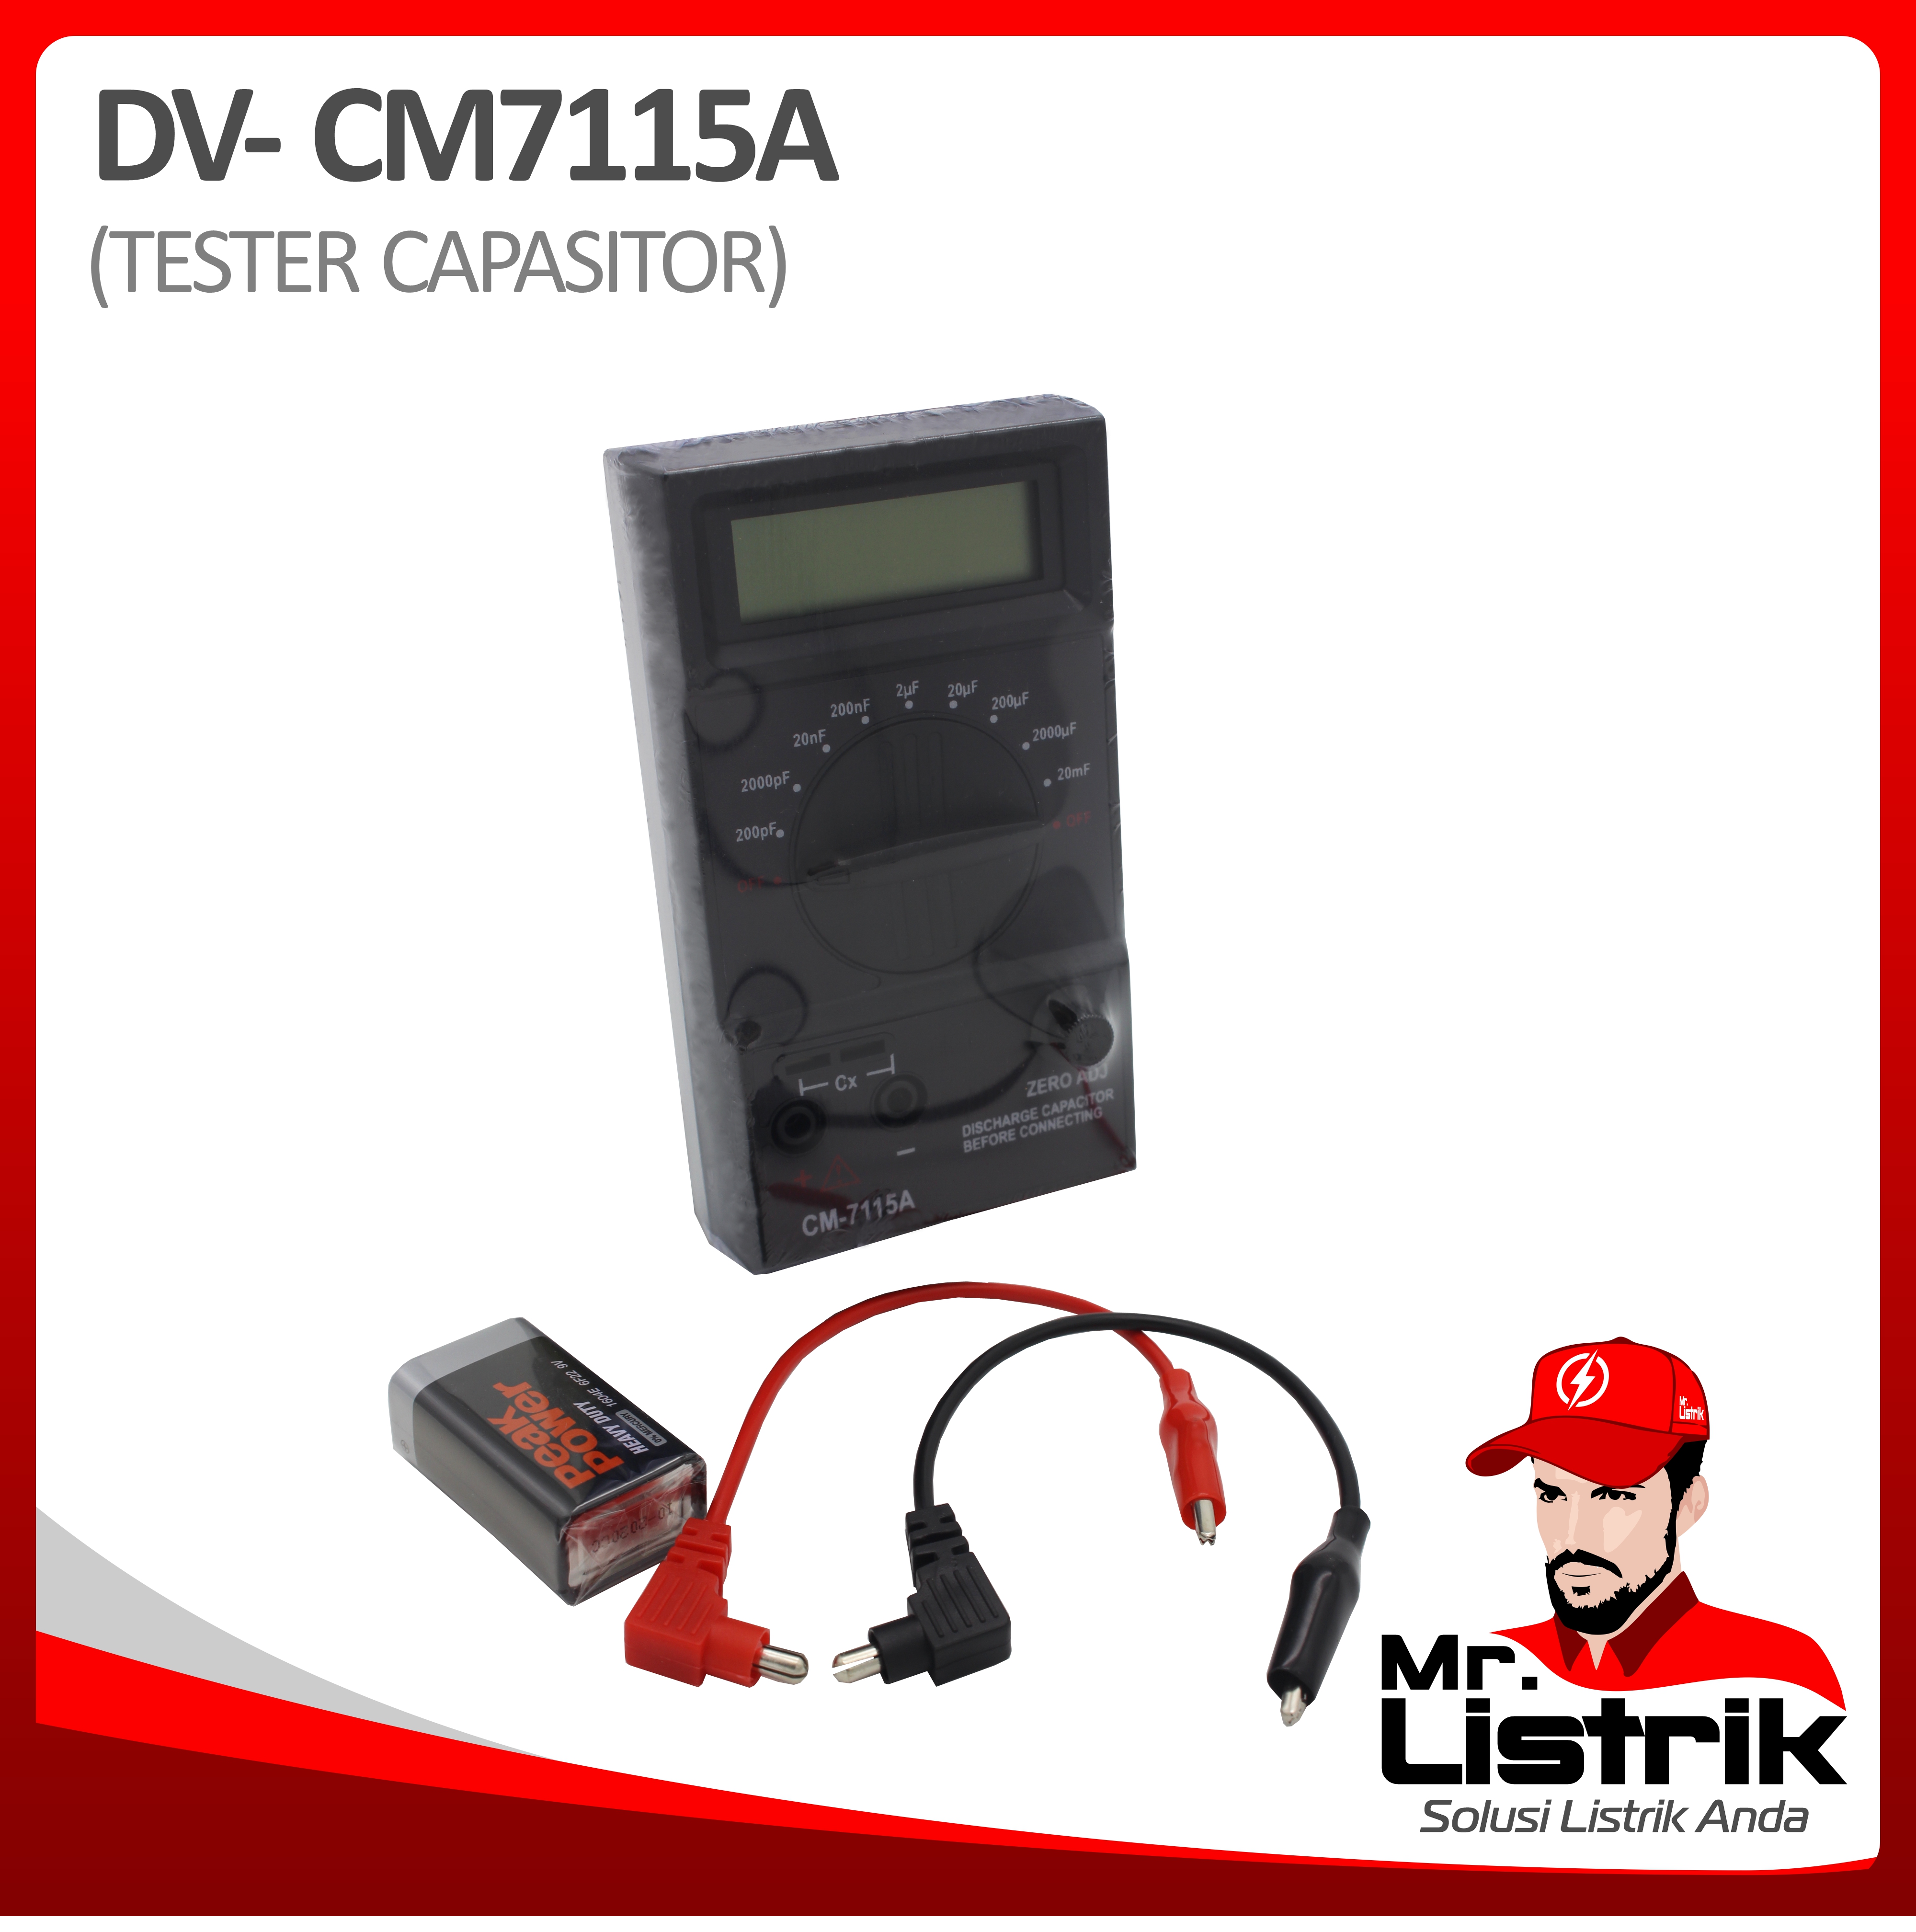 Tester Capacitor DV CM7115A